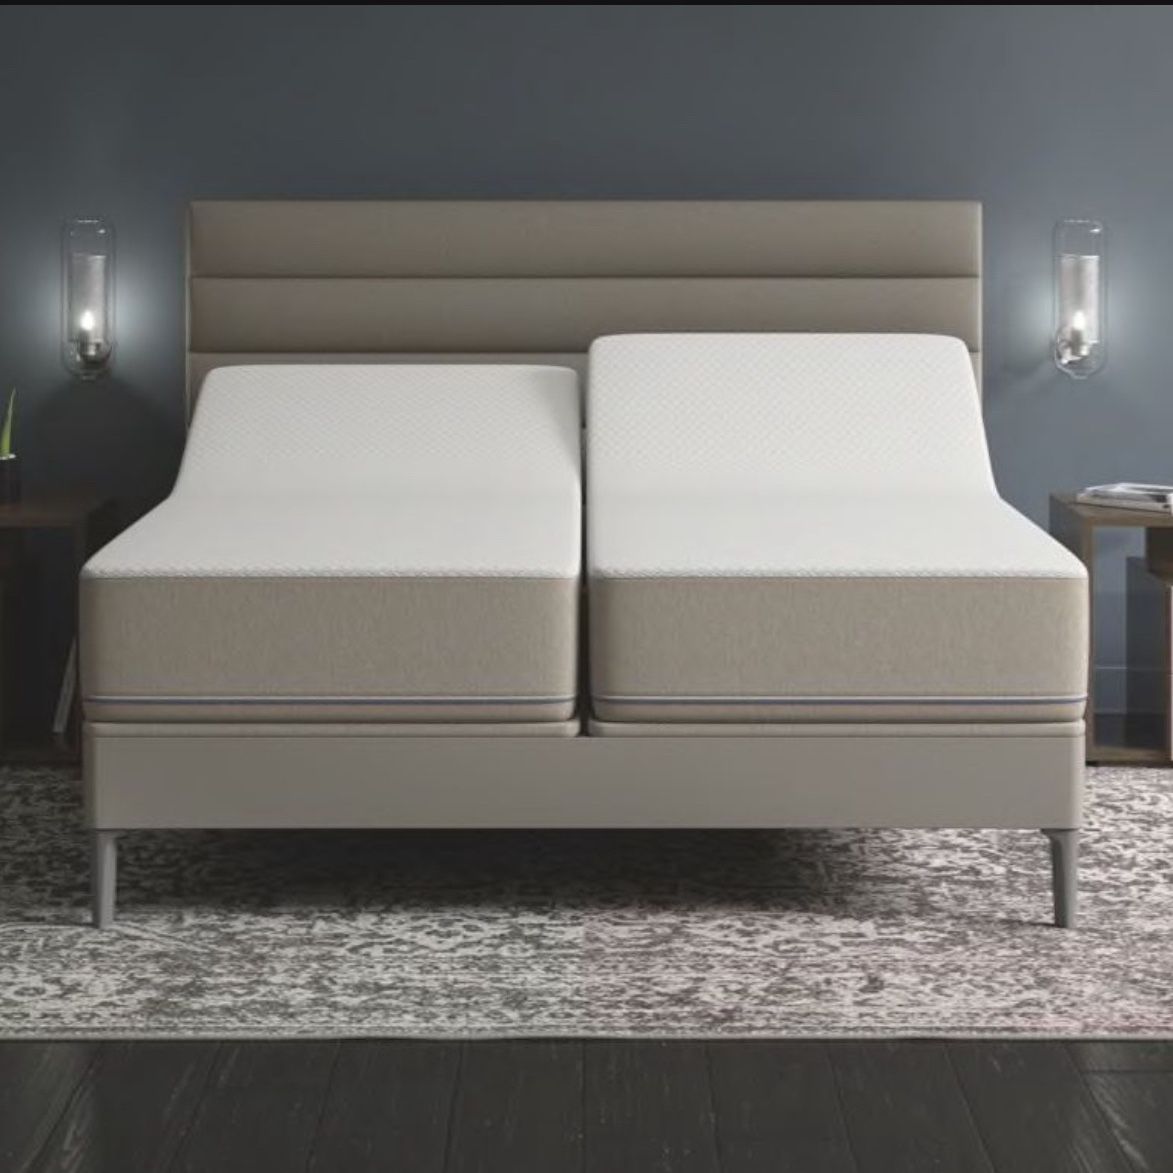 SLEEP NUMBER 360® iLE LIMITED EDITION SMART BED